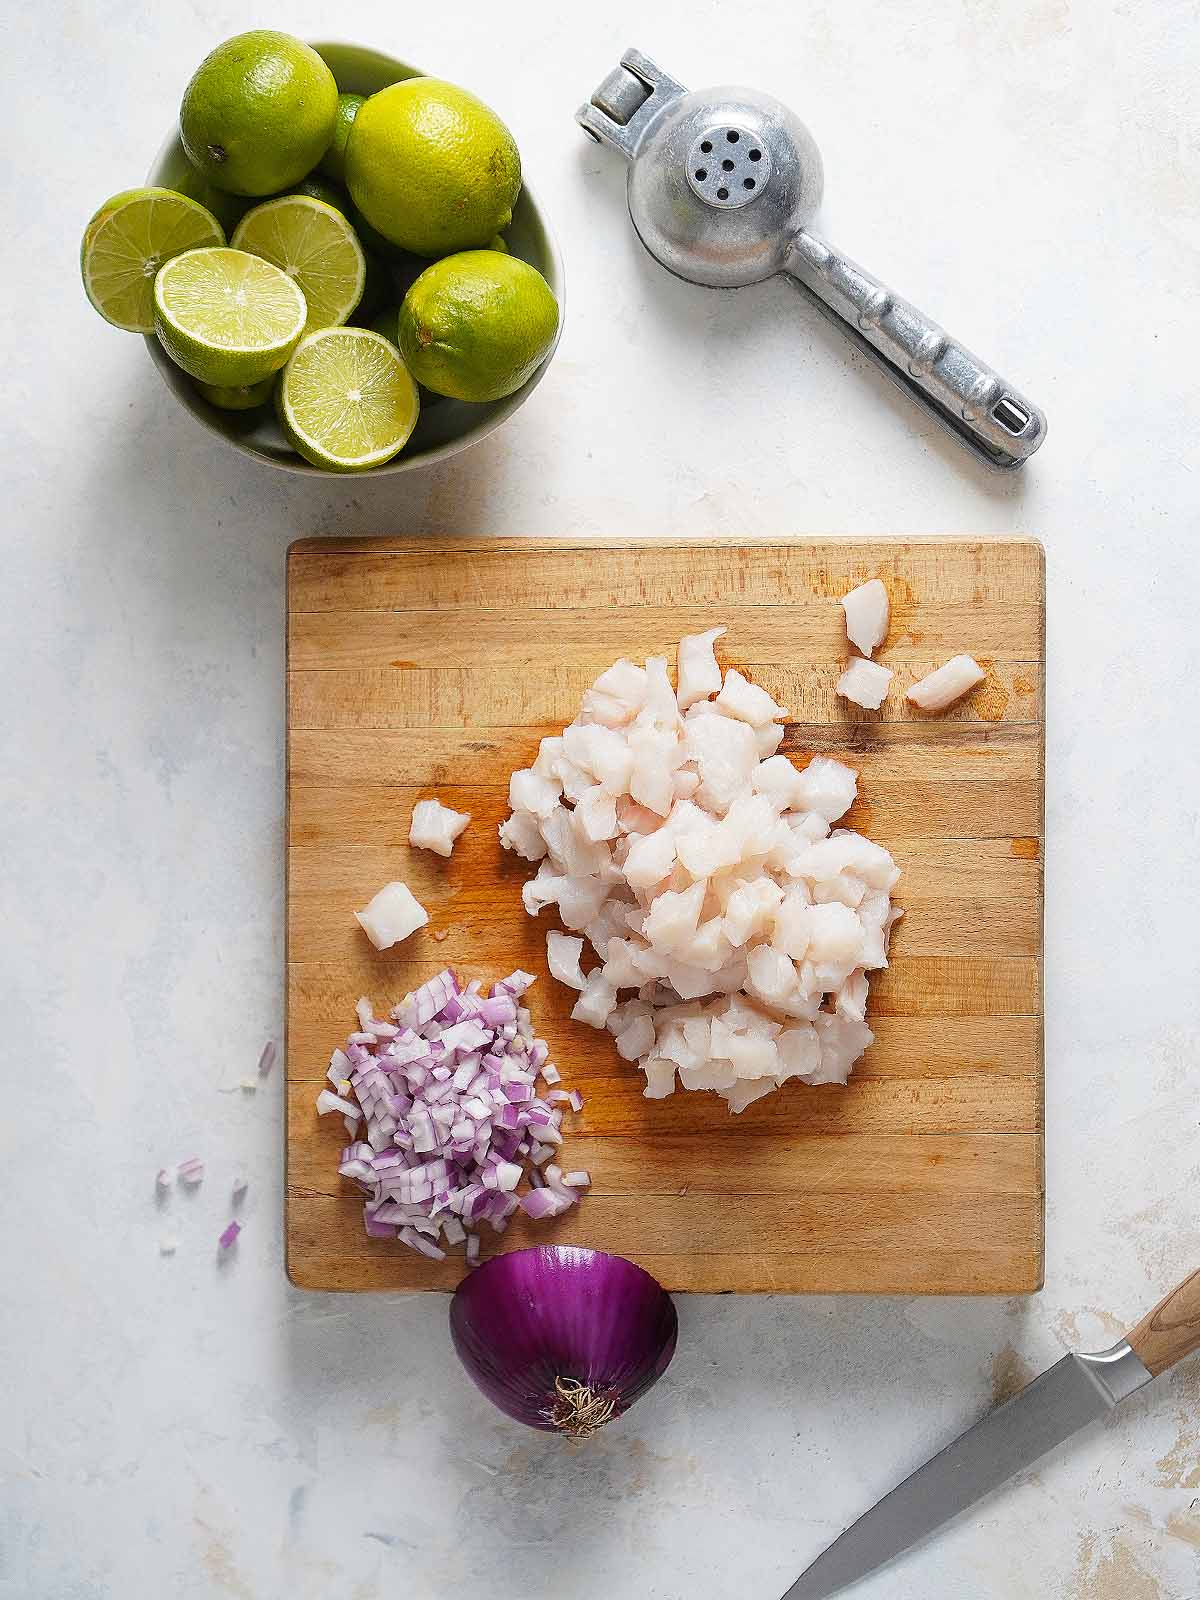 Chopped white fish on a wood cutting board.